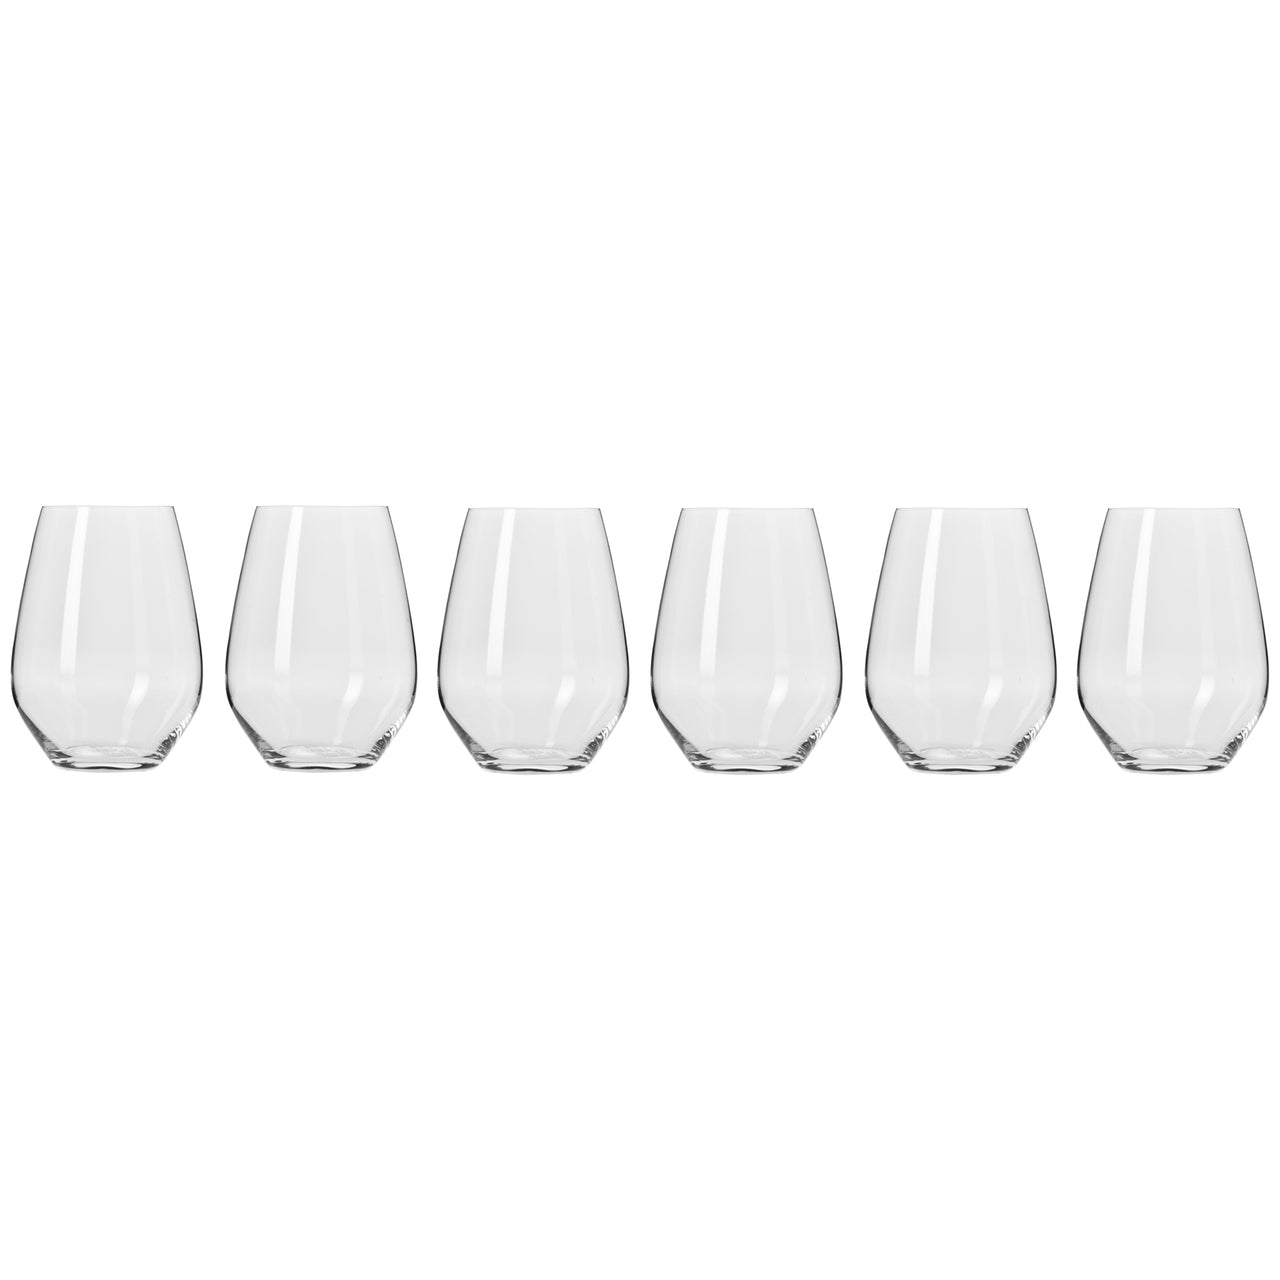 Harmony 540ml Stemless Wine Glasses (Set of 6)